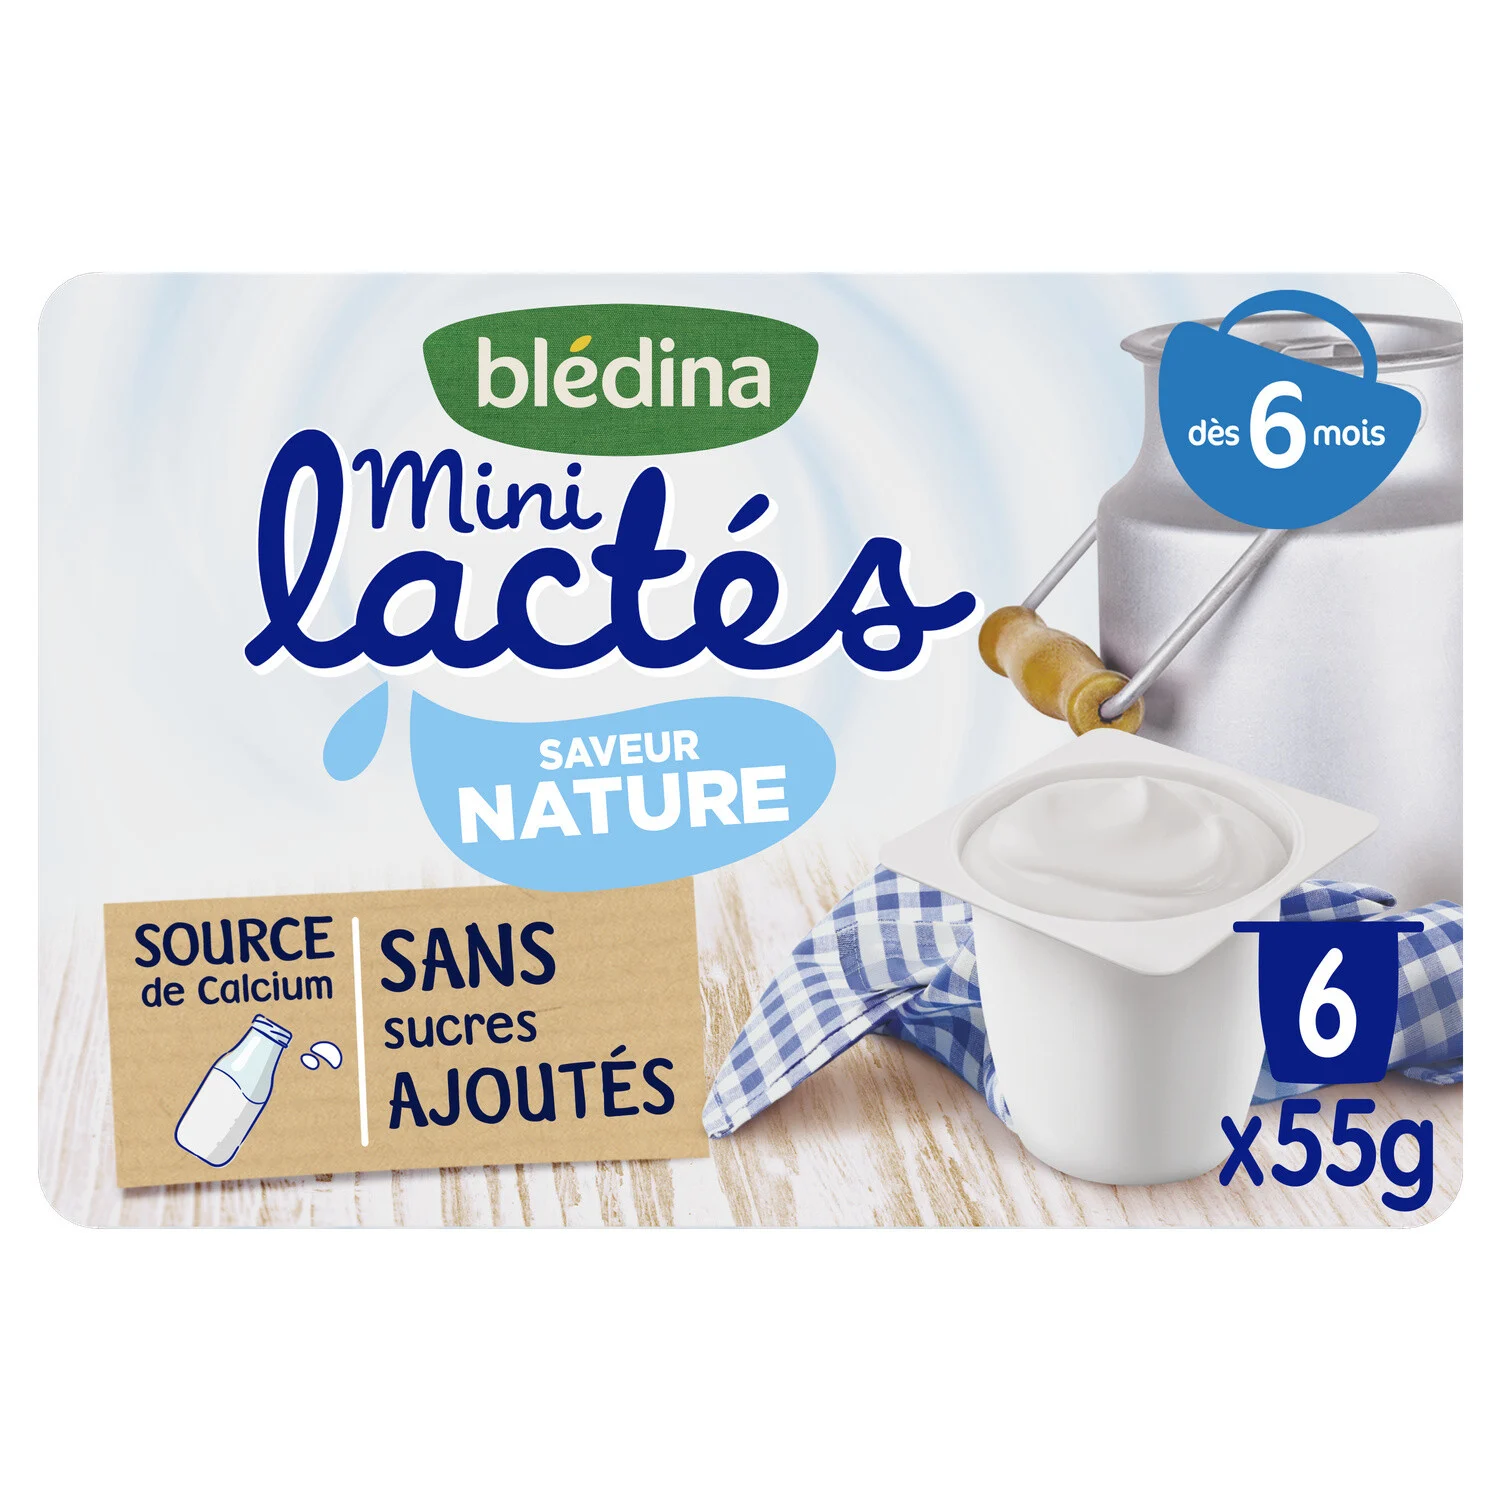 Bledina Mini Lactes Plain yogurt 6x55g from 6 to 36 months